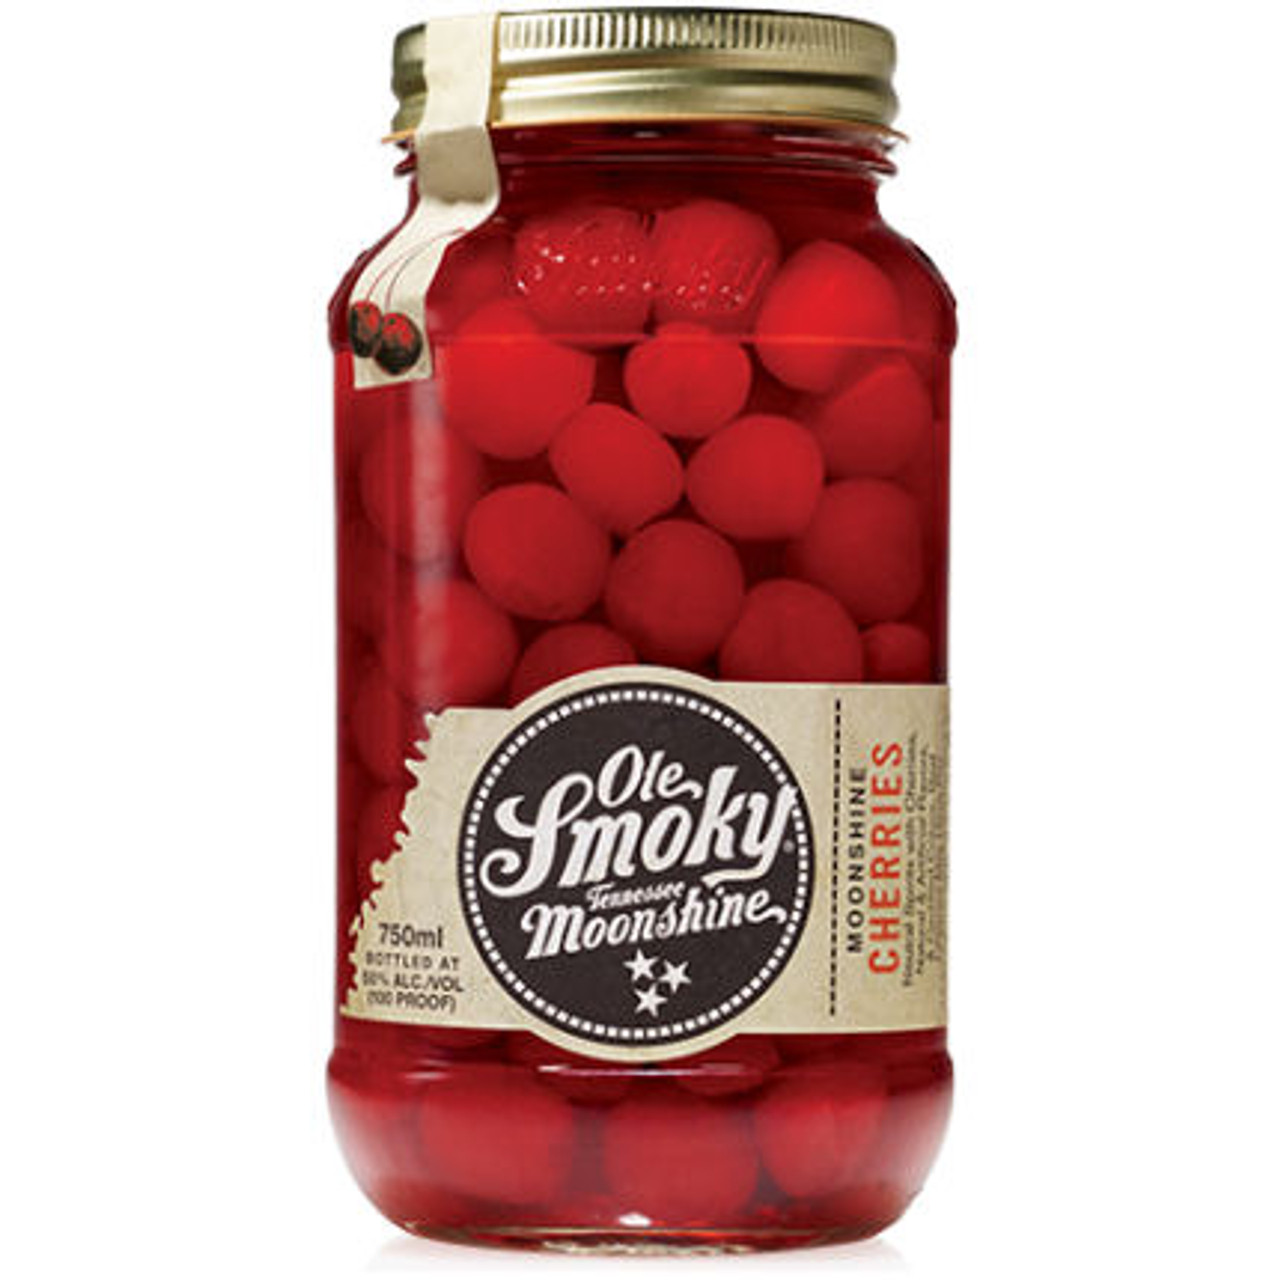 Ole Smoky Tennessee Moonshine Cherries 750ml